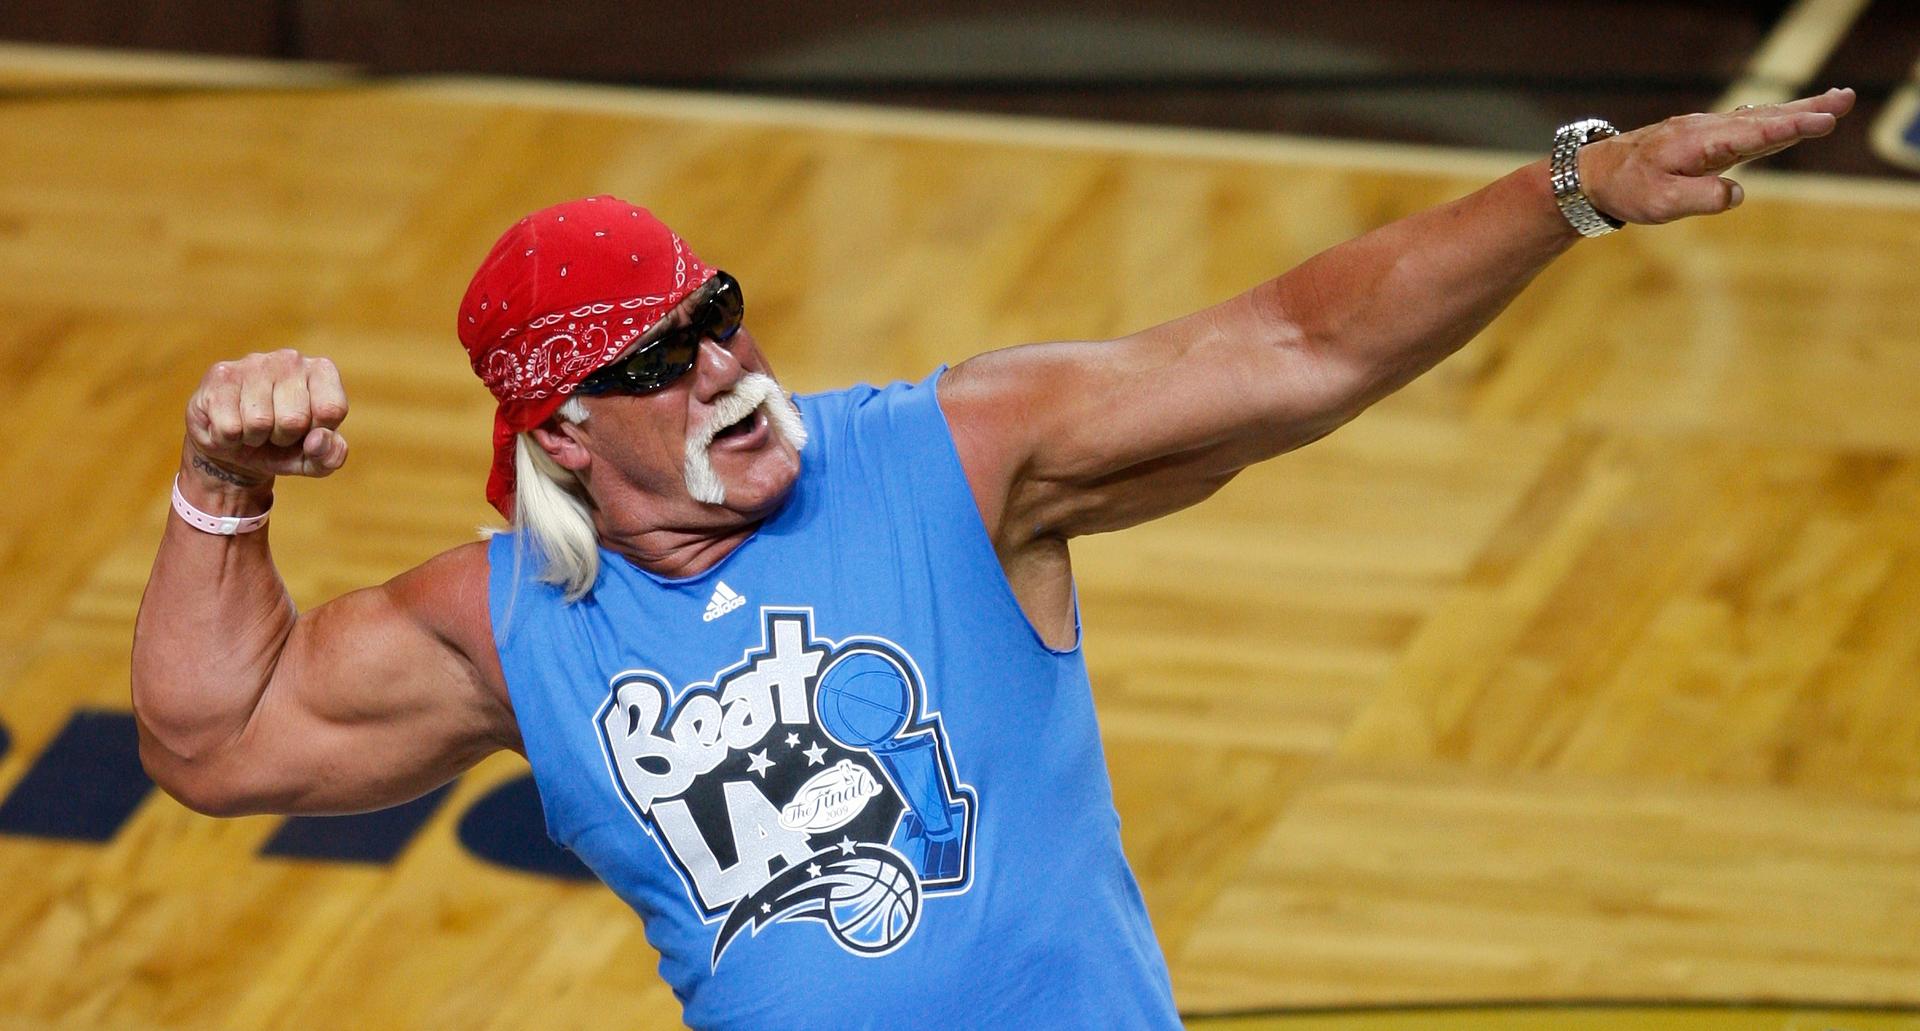 Wrestler Hulk Hogan rallies the crowd during Game 4 of the 2009 NBA Finals.